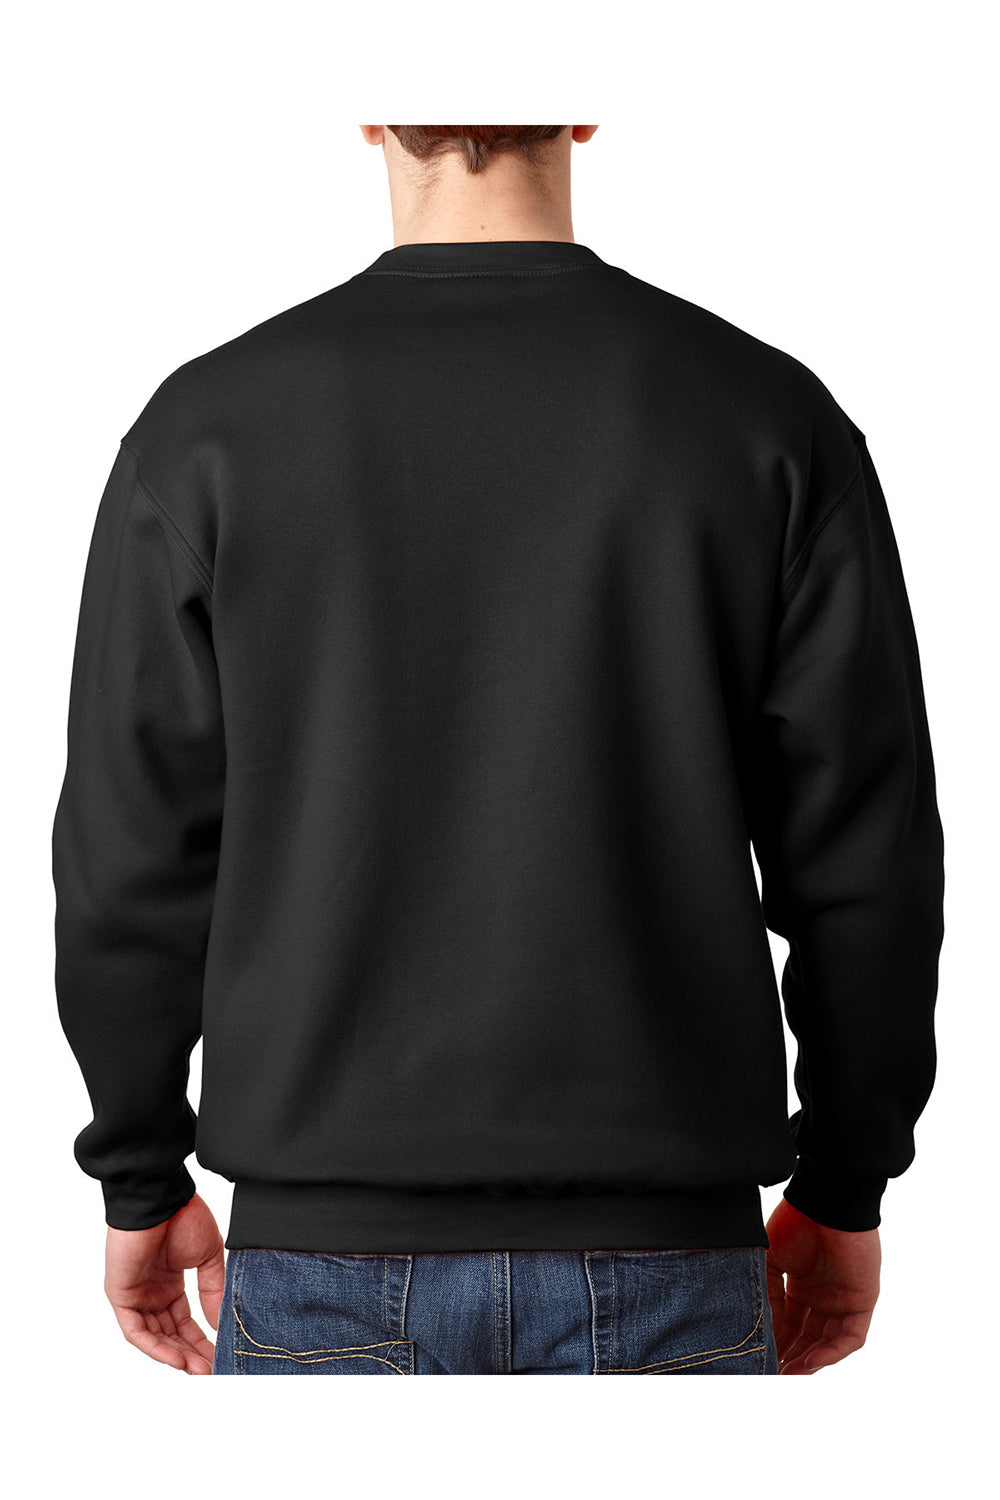 Bayside BA1102 Mens USA Made Crewneck Sweatshirt Black Model Back